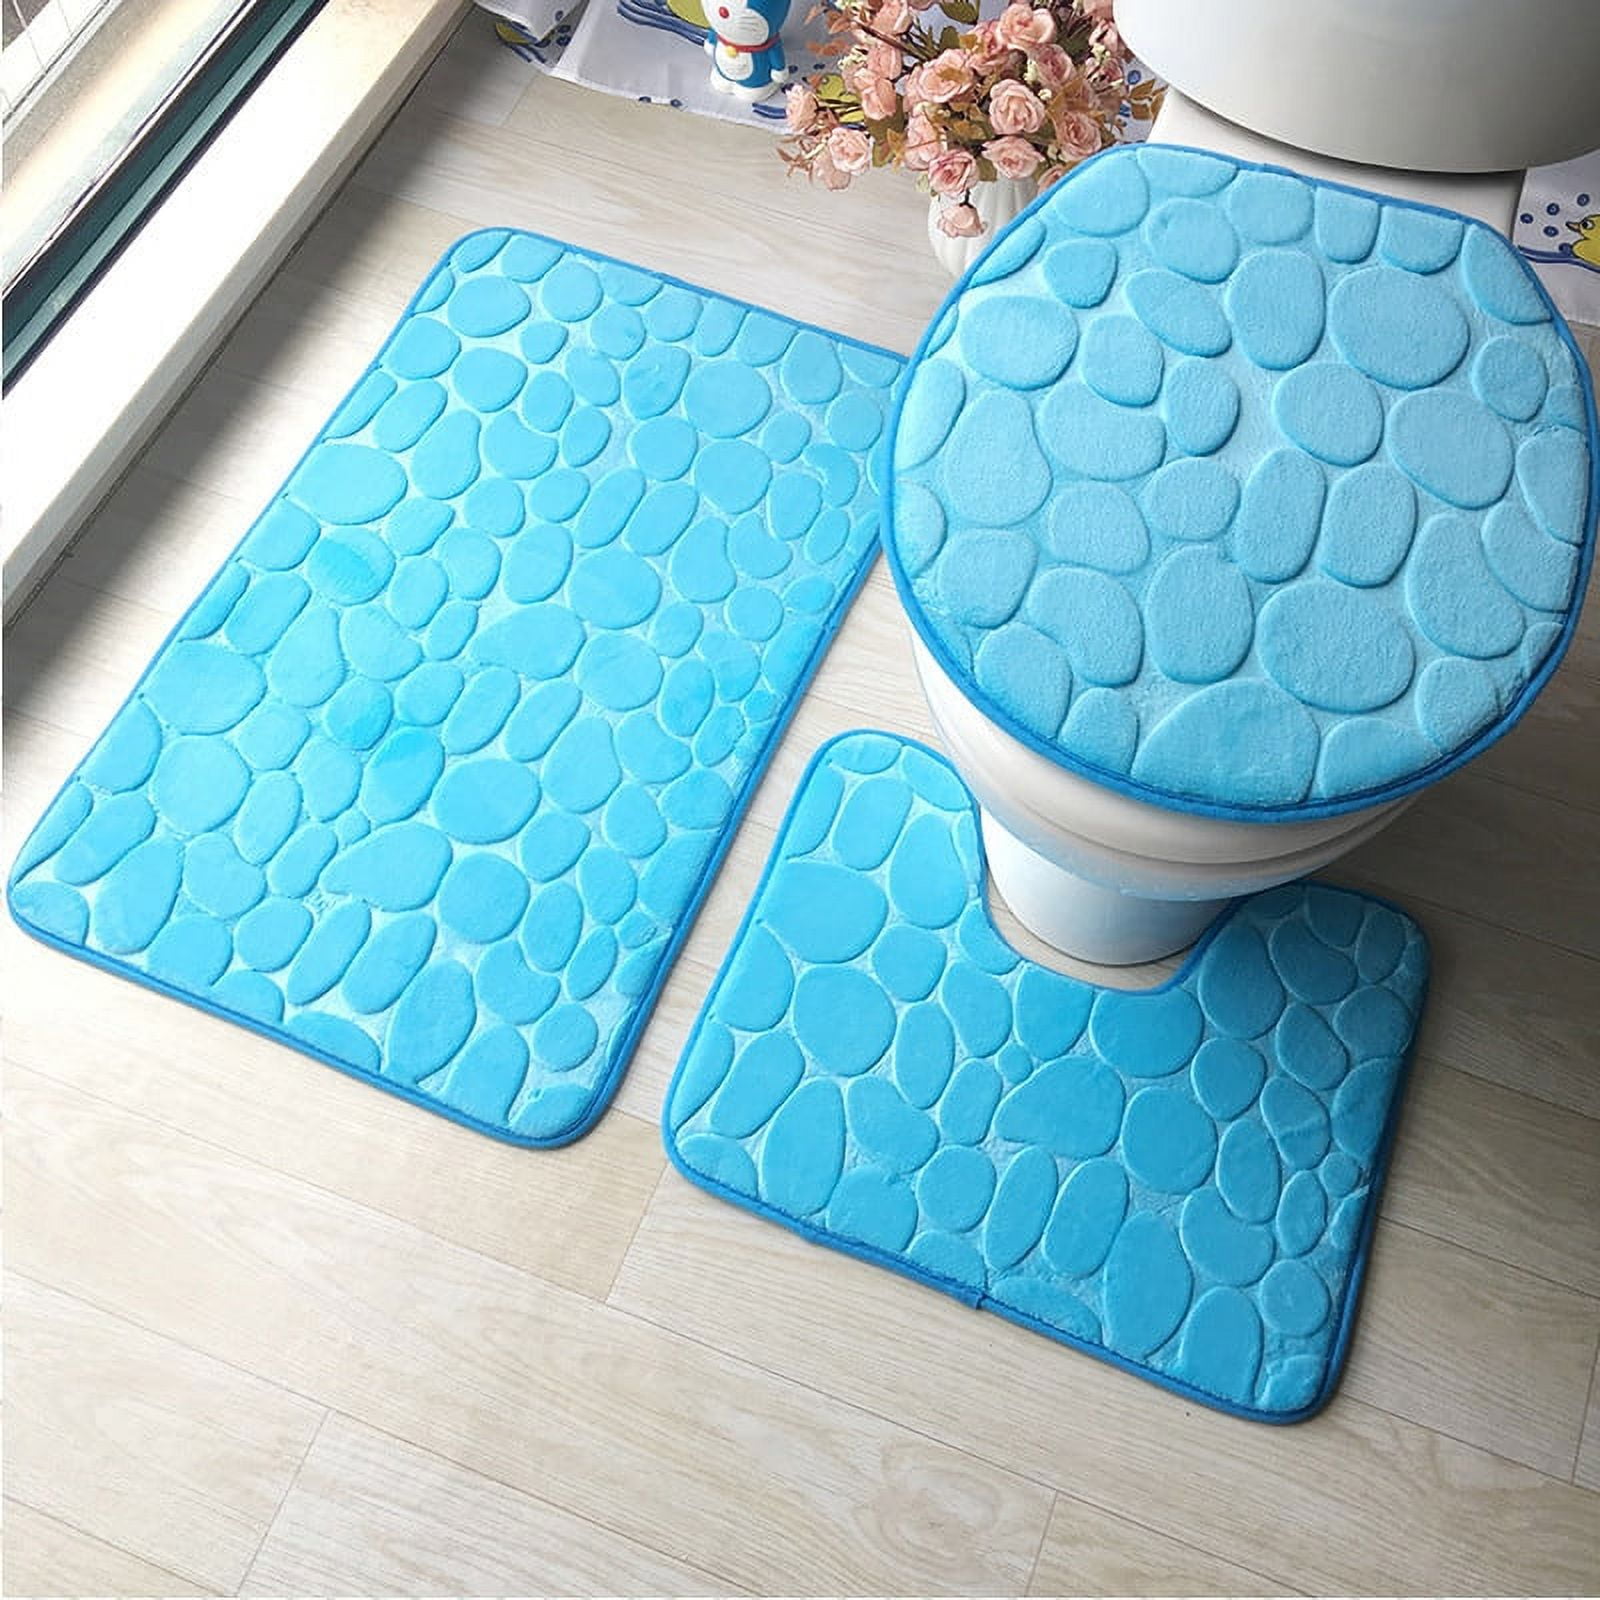 3Pcs Flannel Bathroom Mat Set Hydrophilic Toilet Carpet Washable Kitchen Floor  Rug Anti-Slip Shower Room Mat 